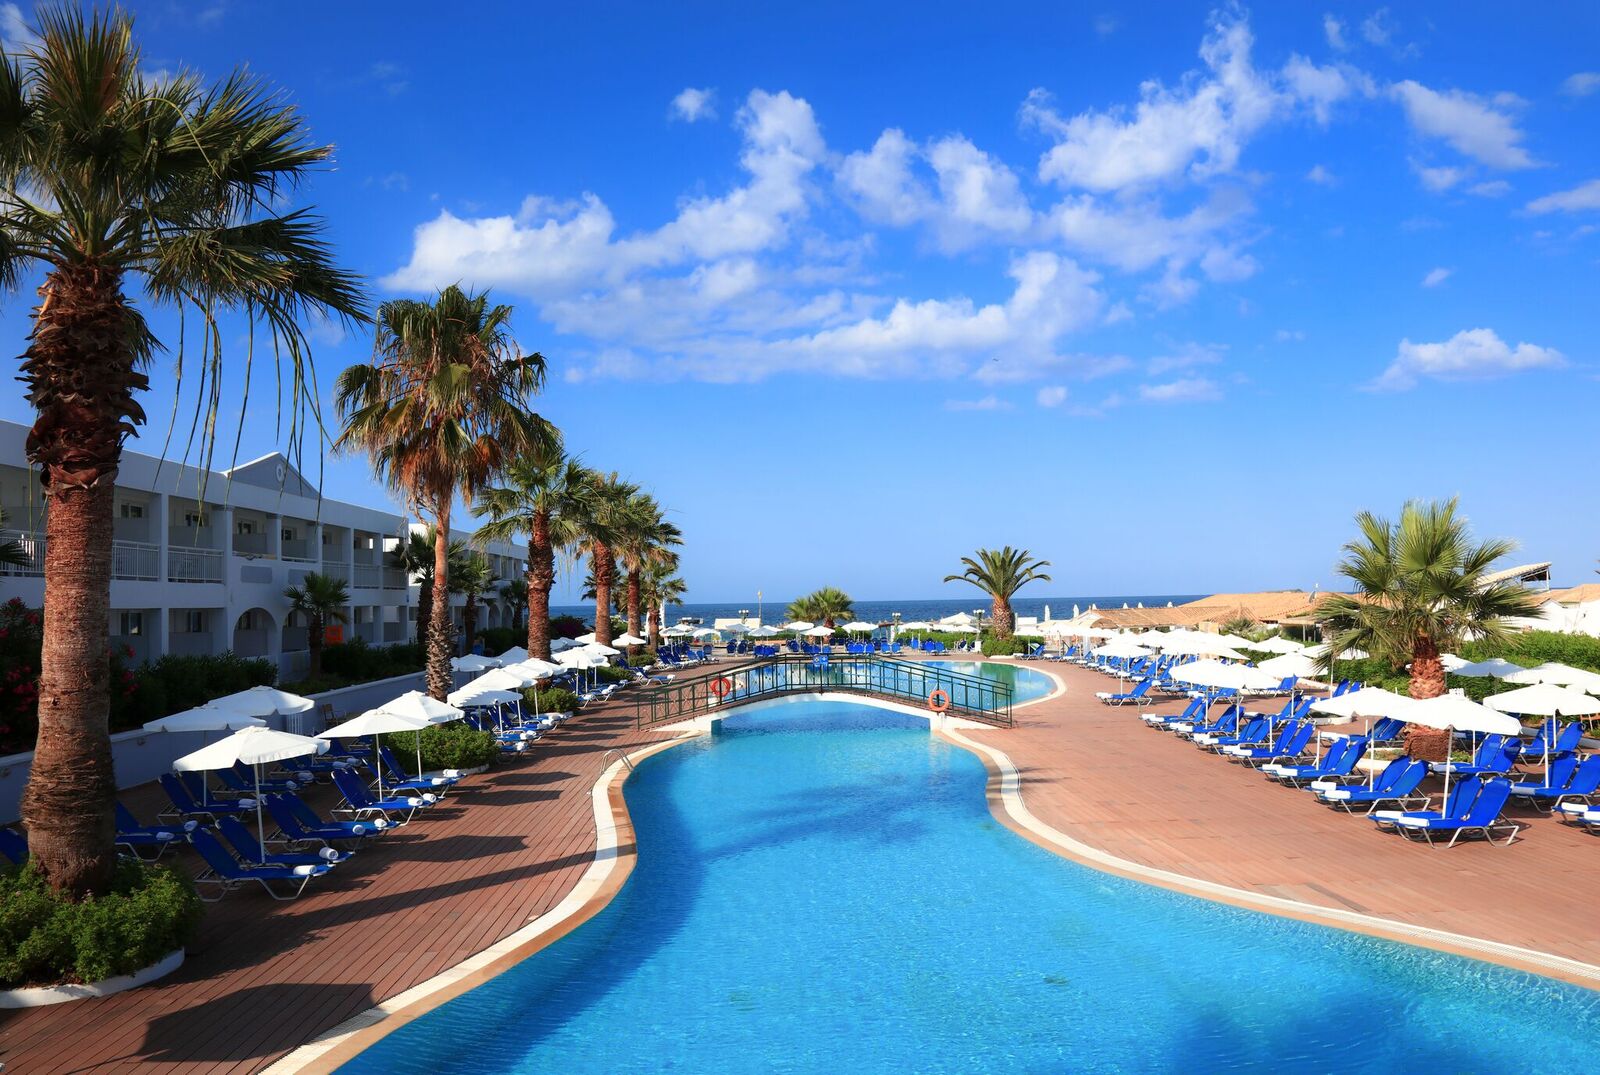 Labranda Sandy Beach Resort Corfu